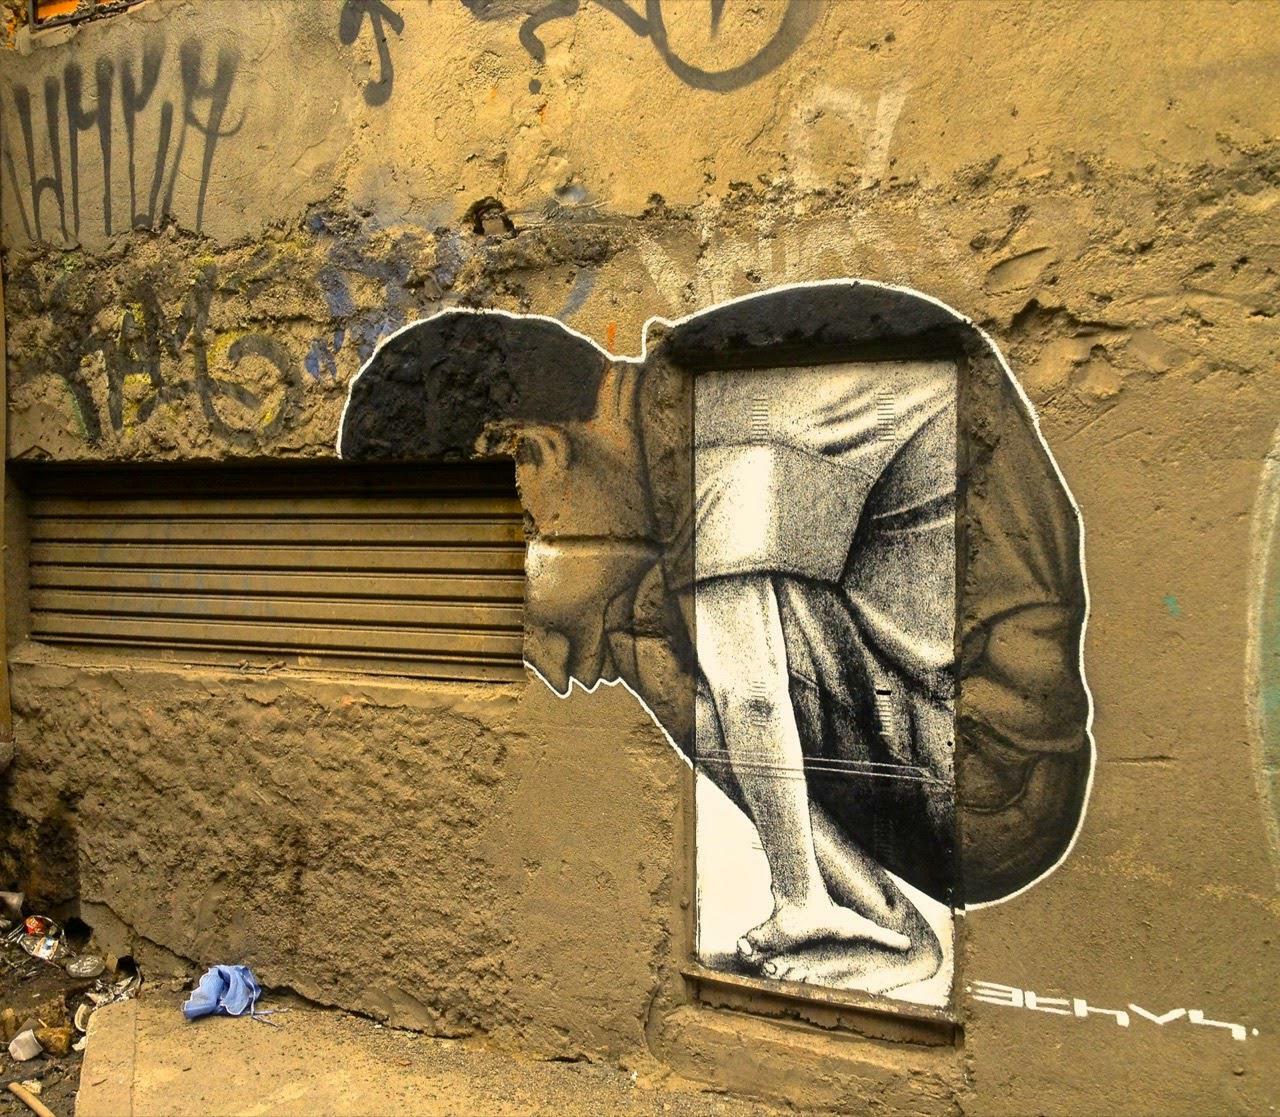 “@StreetArt_Graf: Streetart by Ethos in São Paulo (Brazil)

#streetart #urbanart #mural #art #graffiti http://t.co/v5CcW0GDqx”